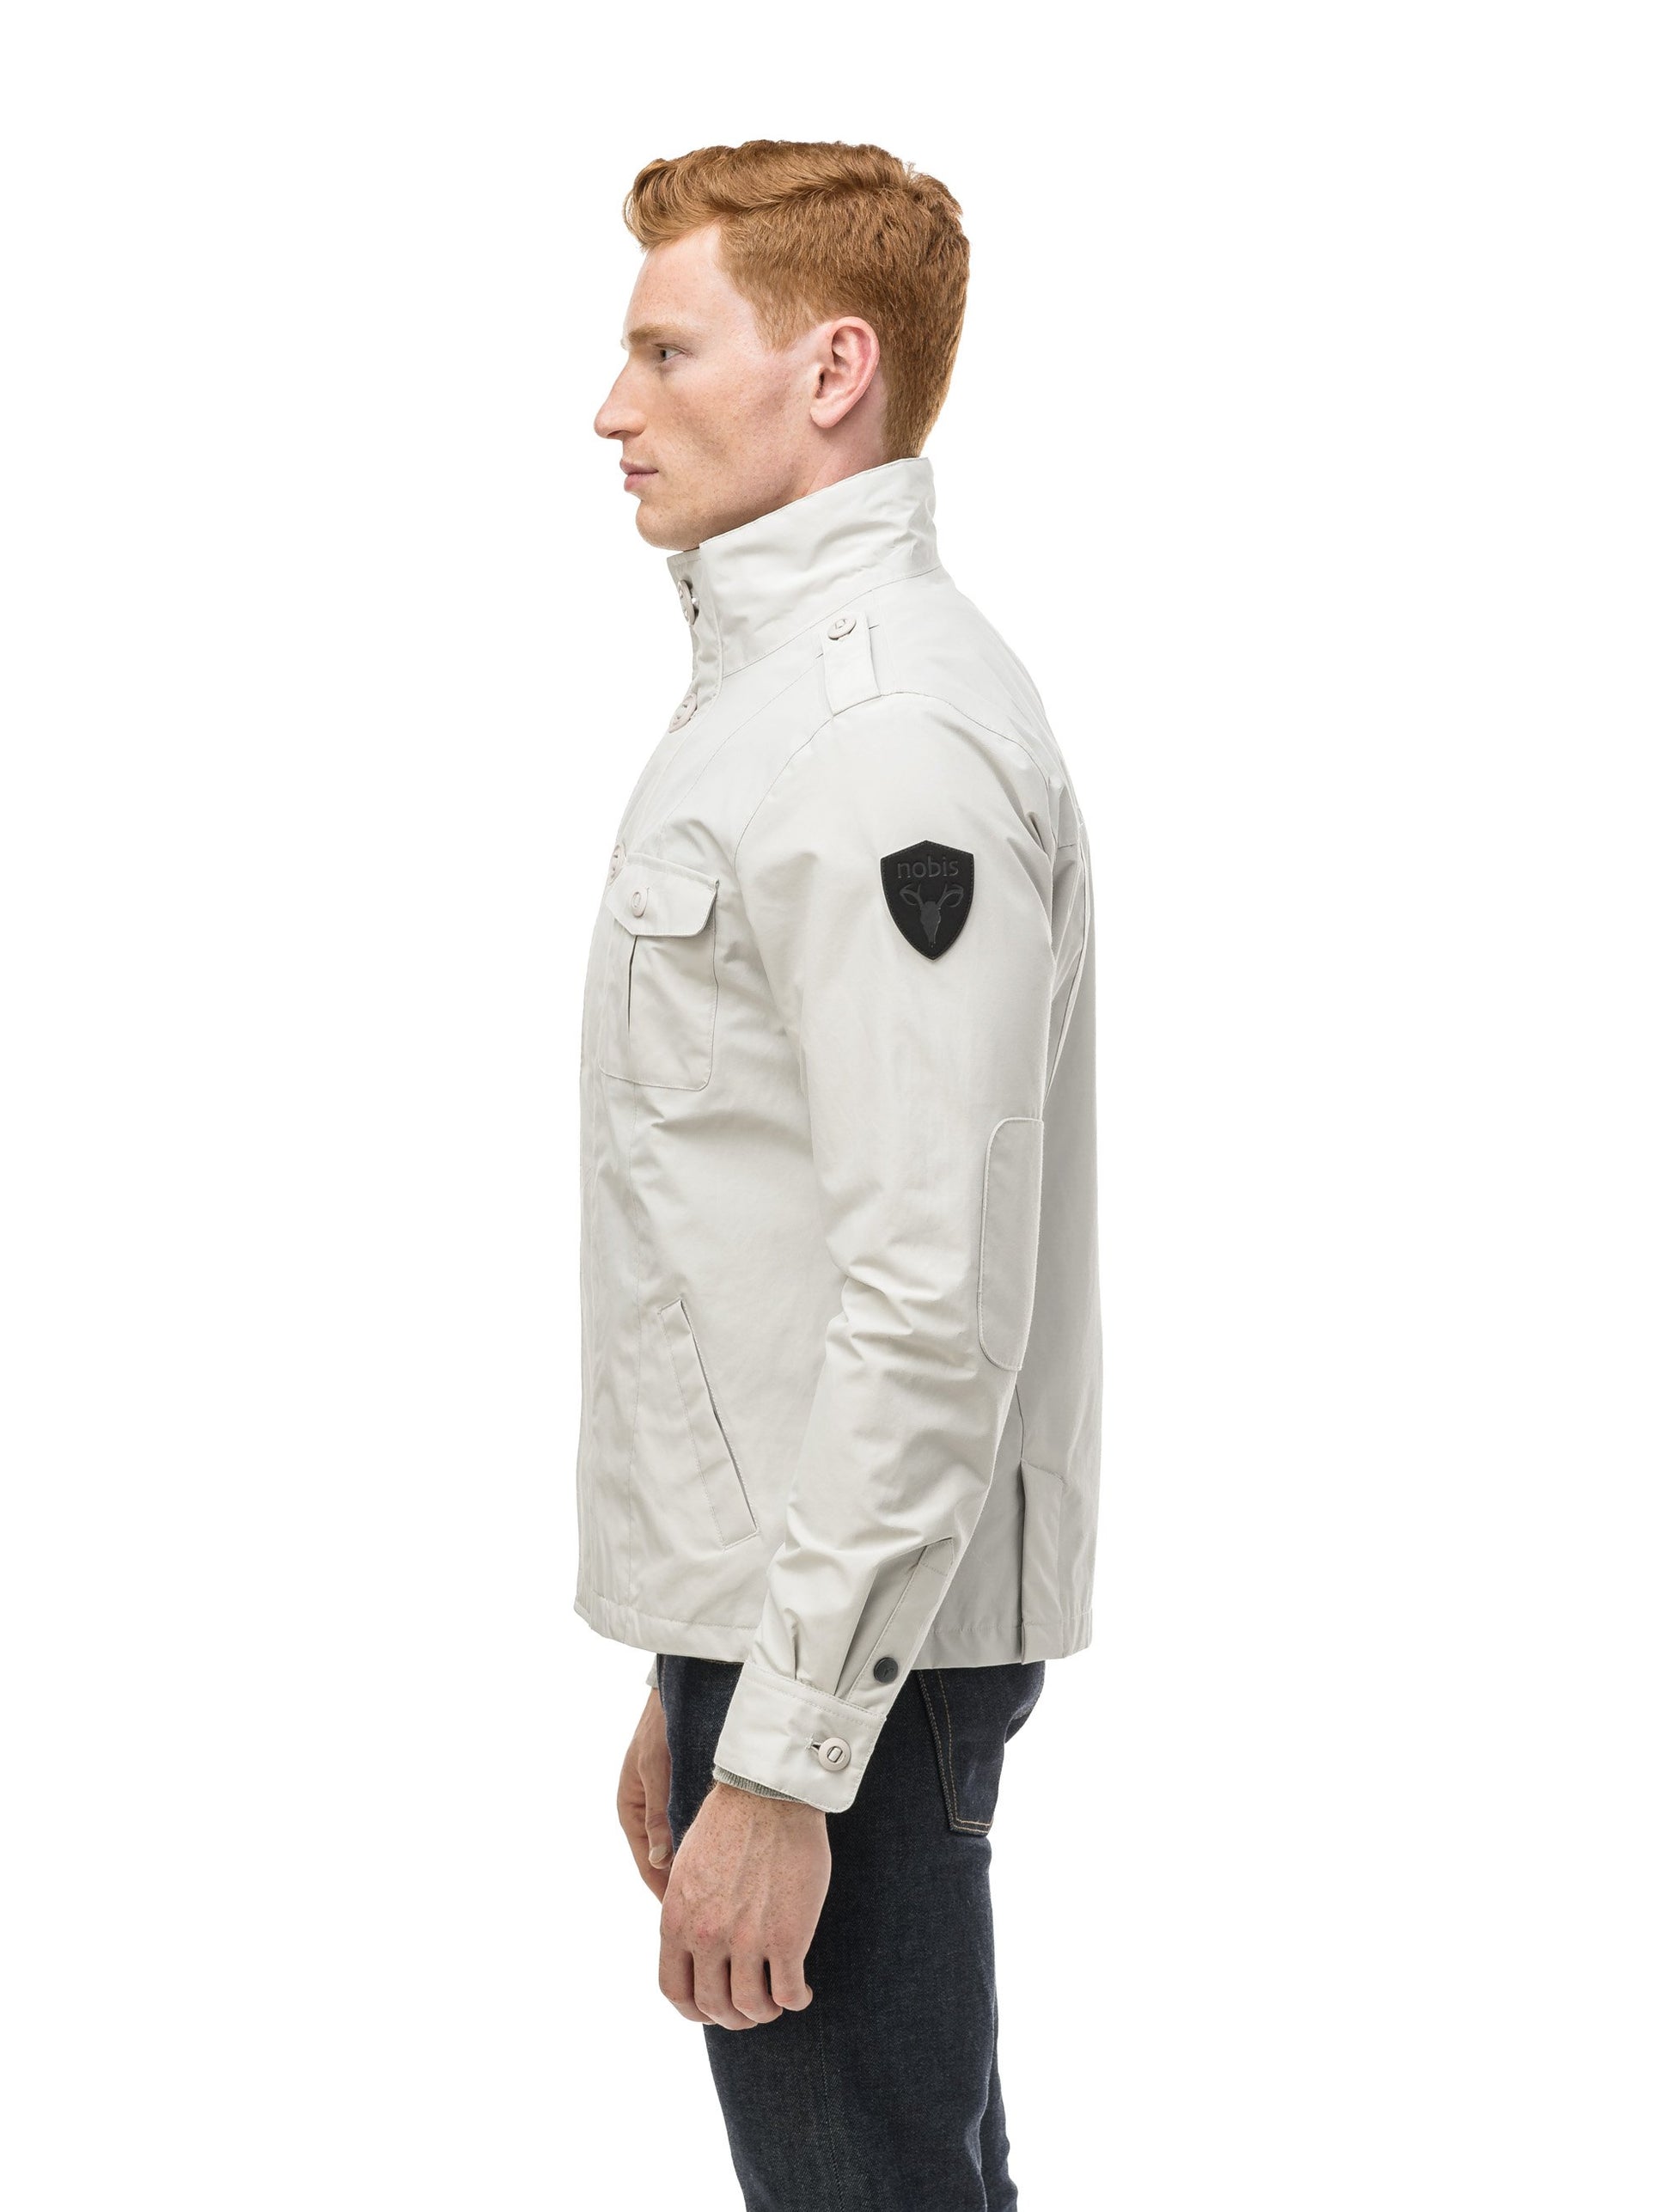 Men's waist length military style jacket in Light Grey